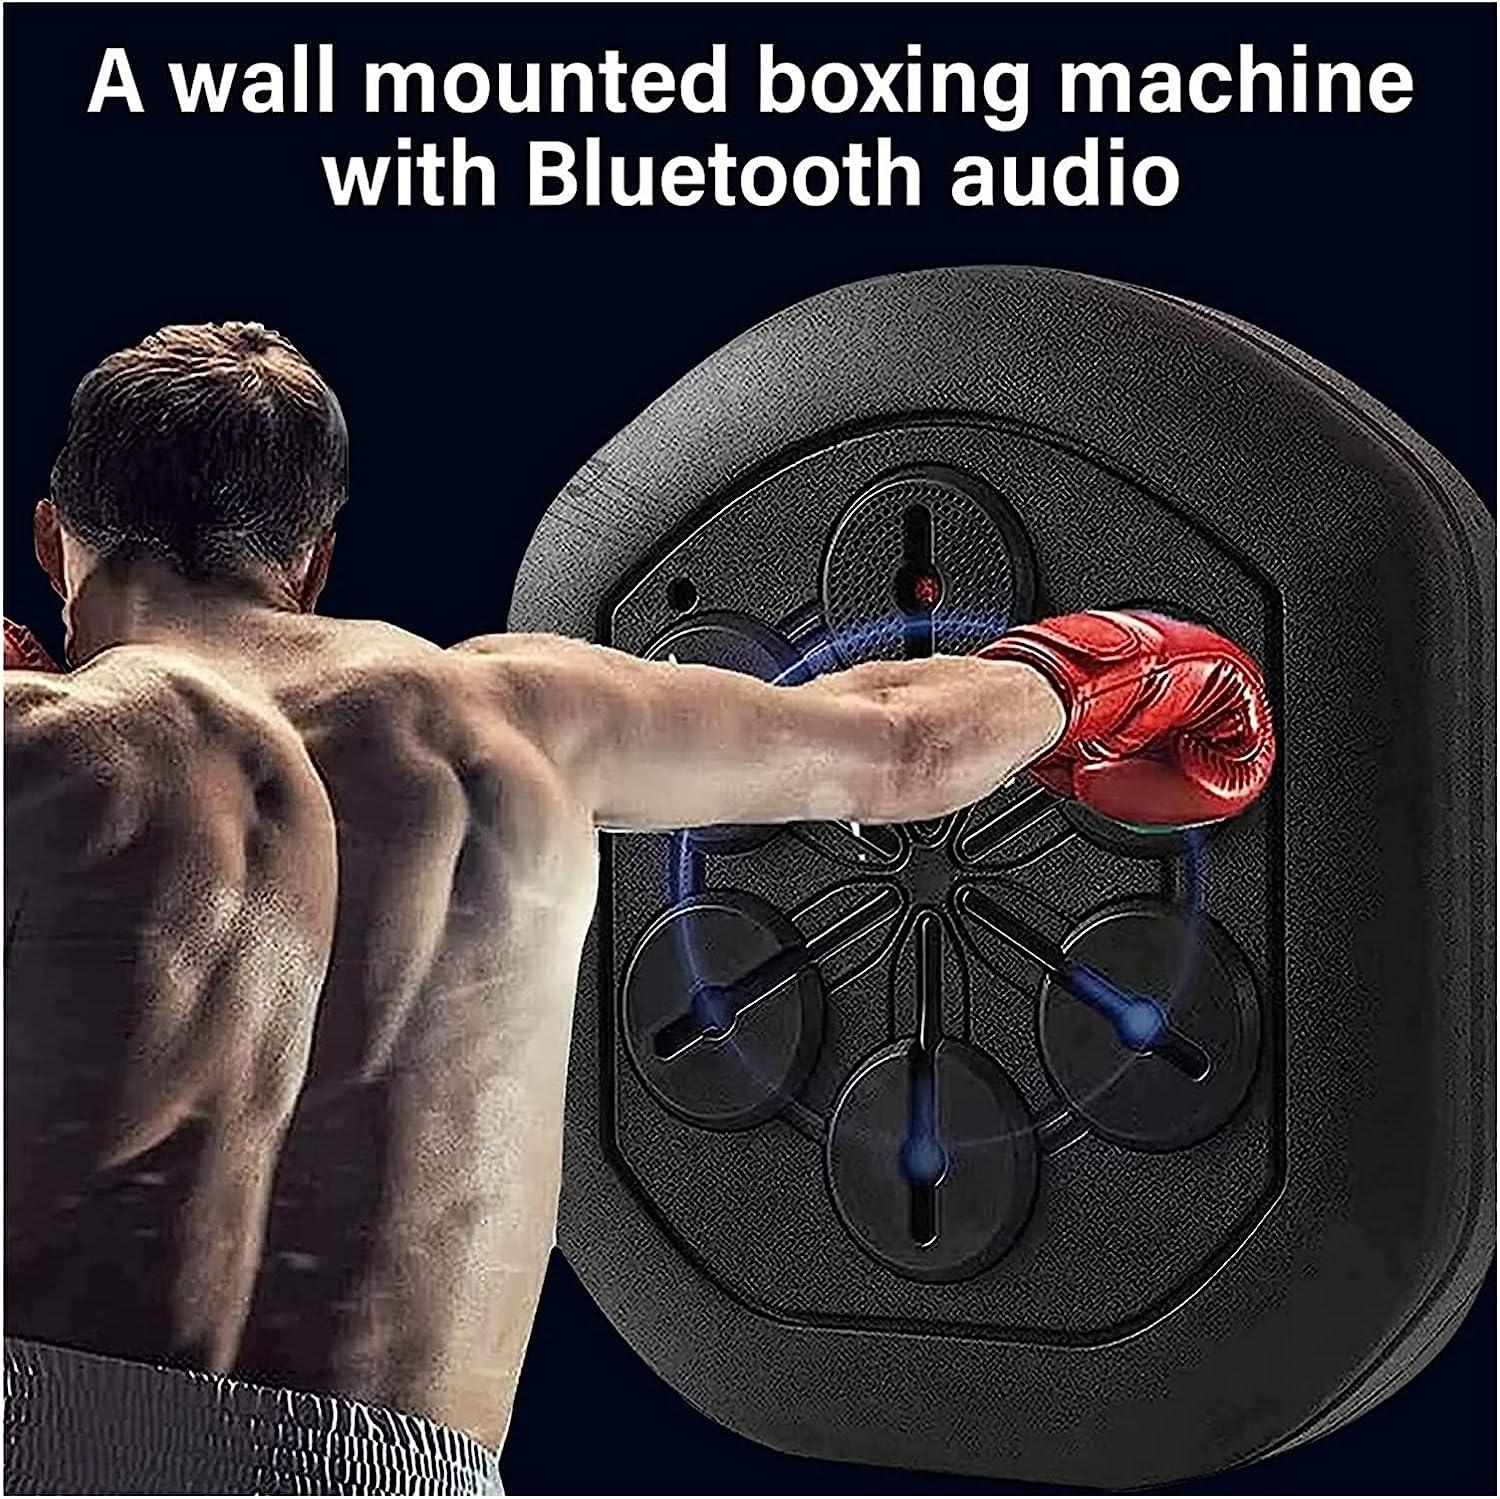 FAJOME Target Boxing Machine, Wall-Mounted Bluetooth Music Boxing